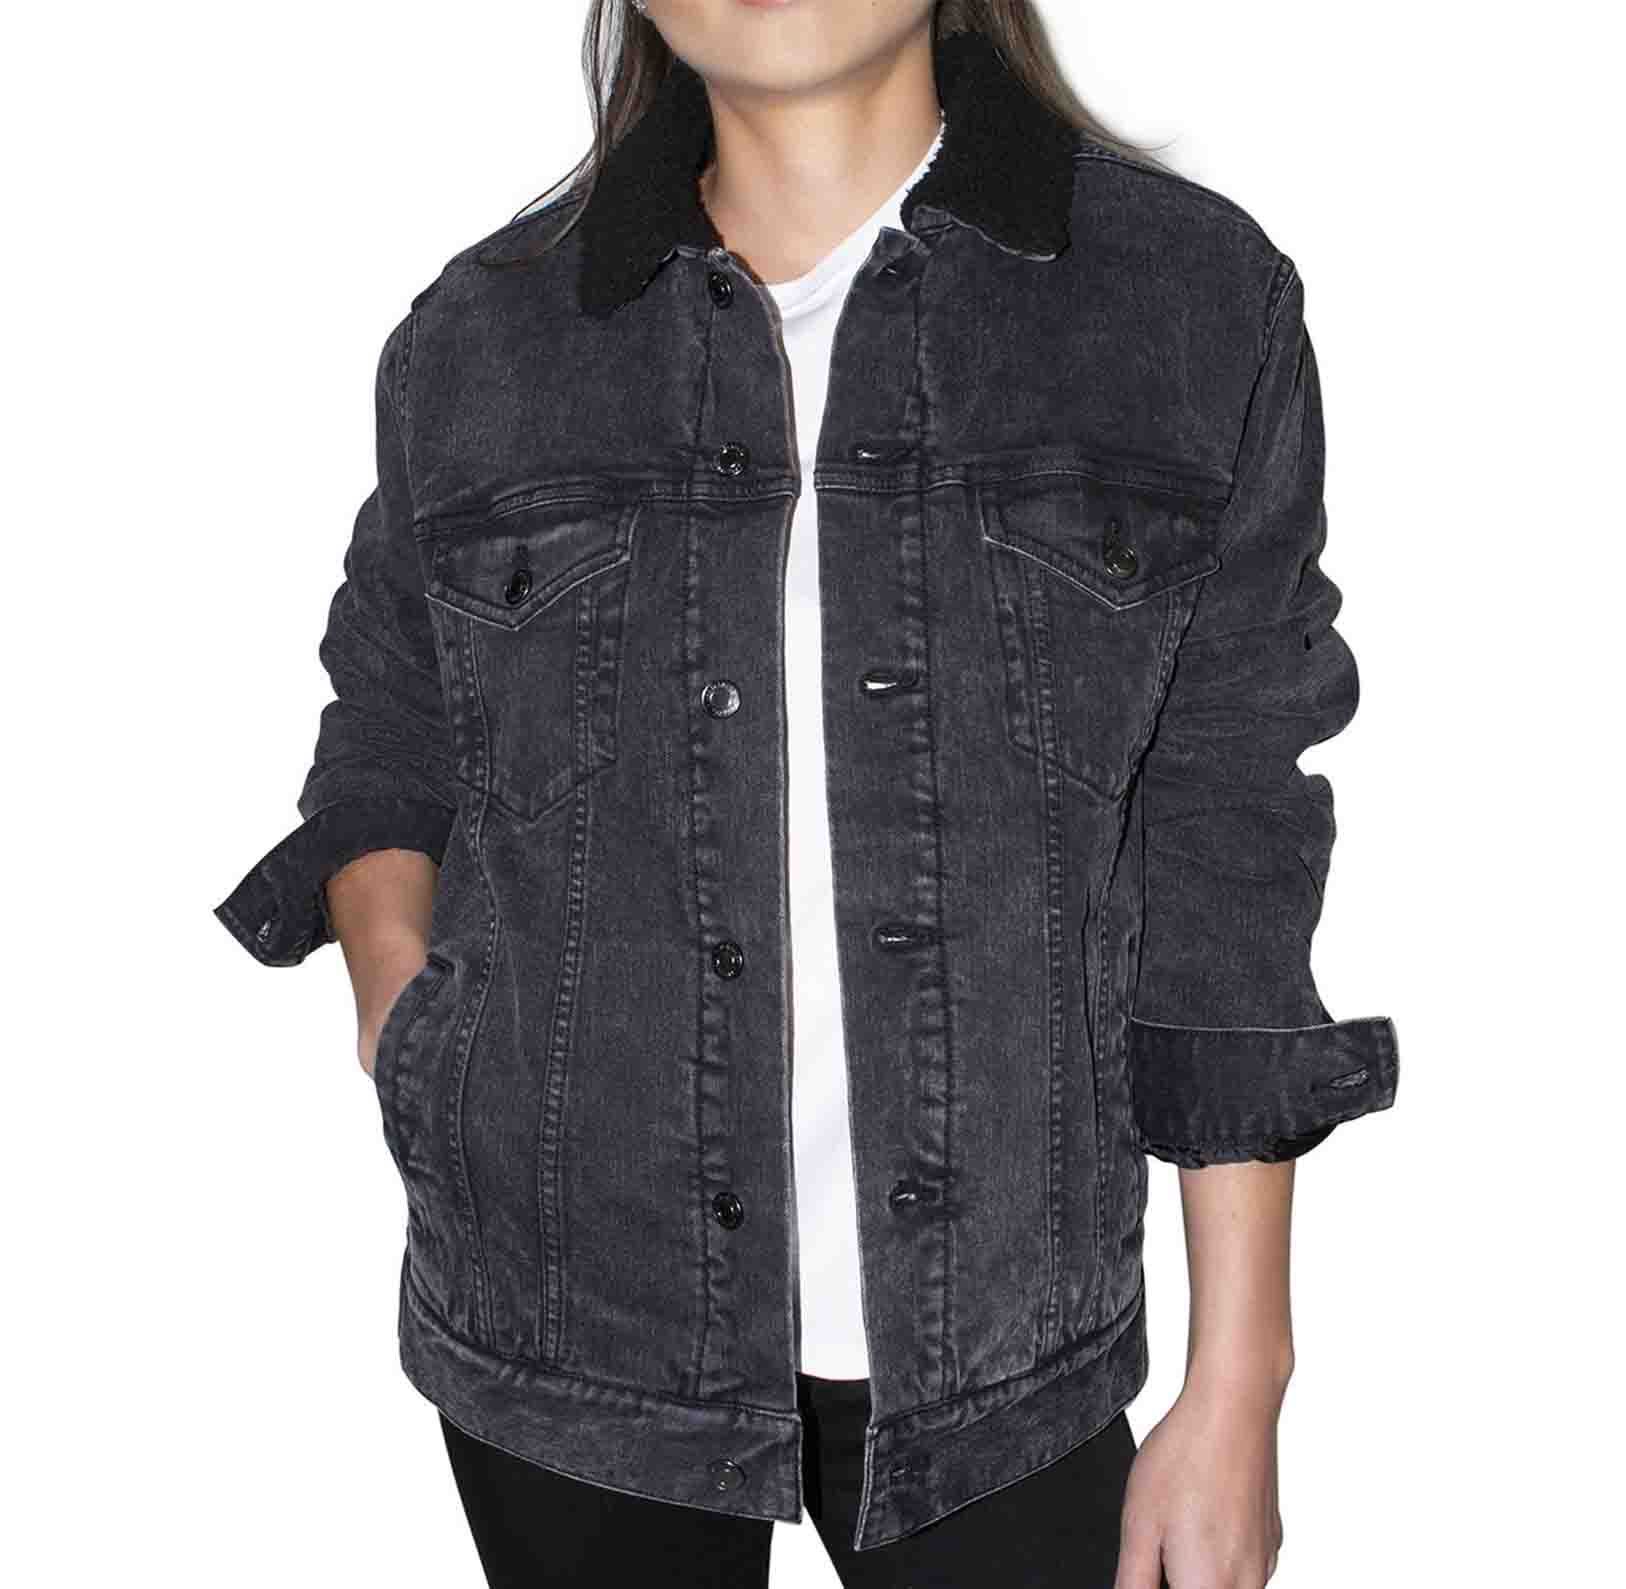 Hand-Painted Denim jacket with art vintage,alternative cloth - Inspire  Uplift